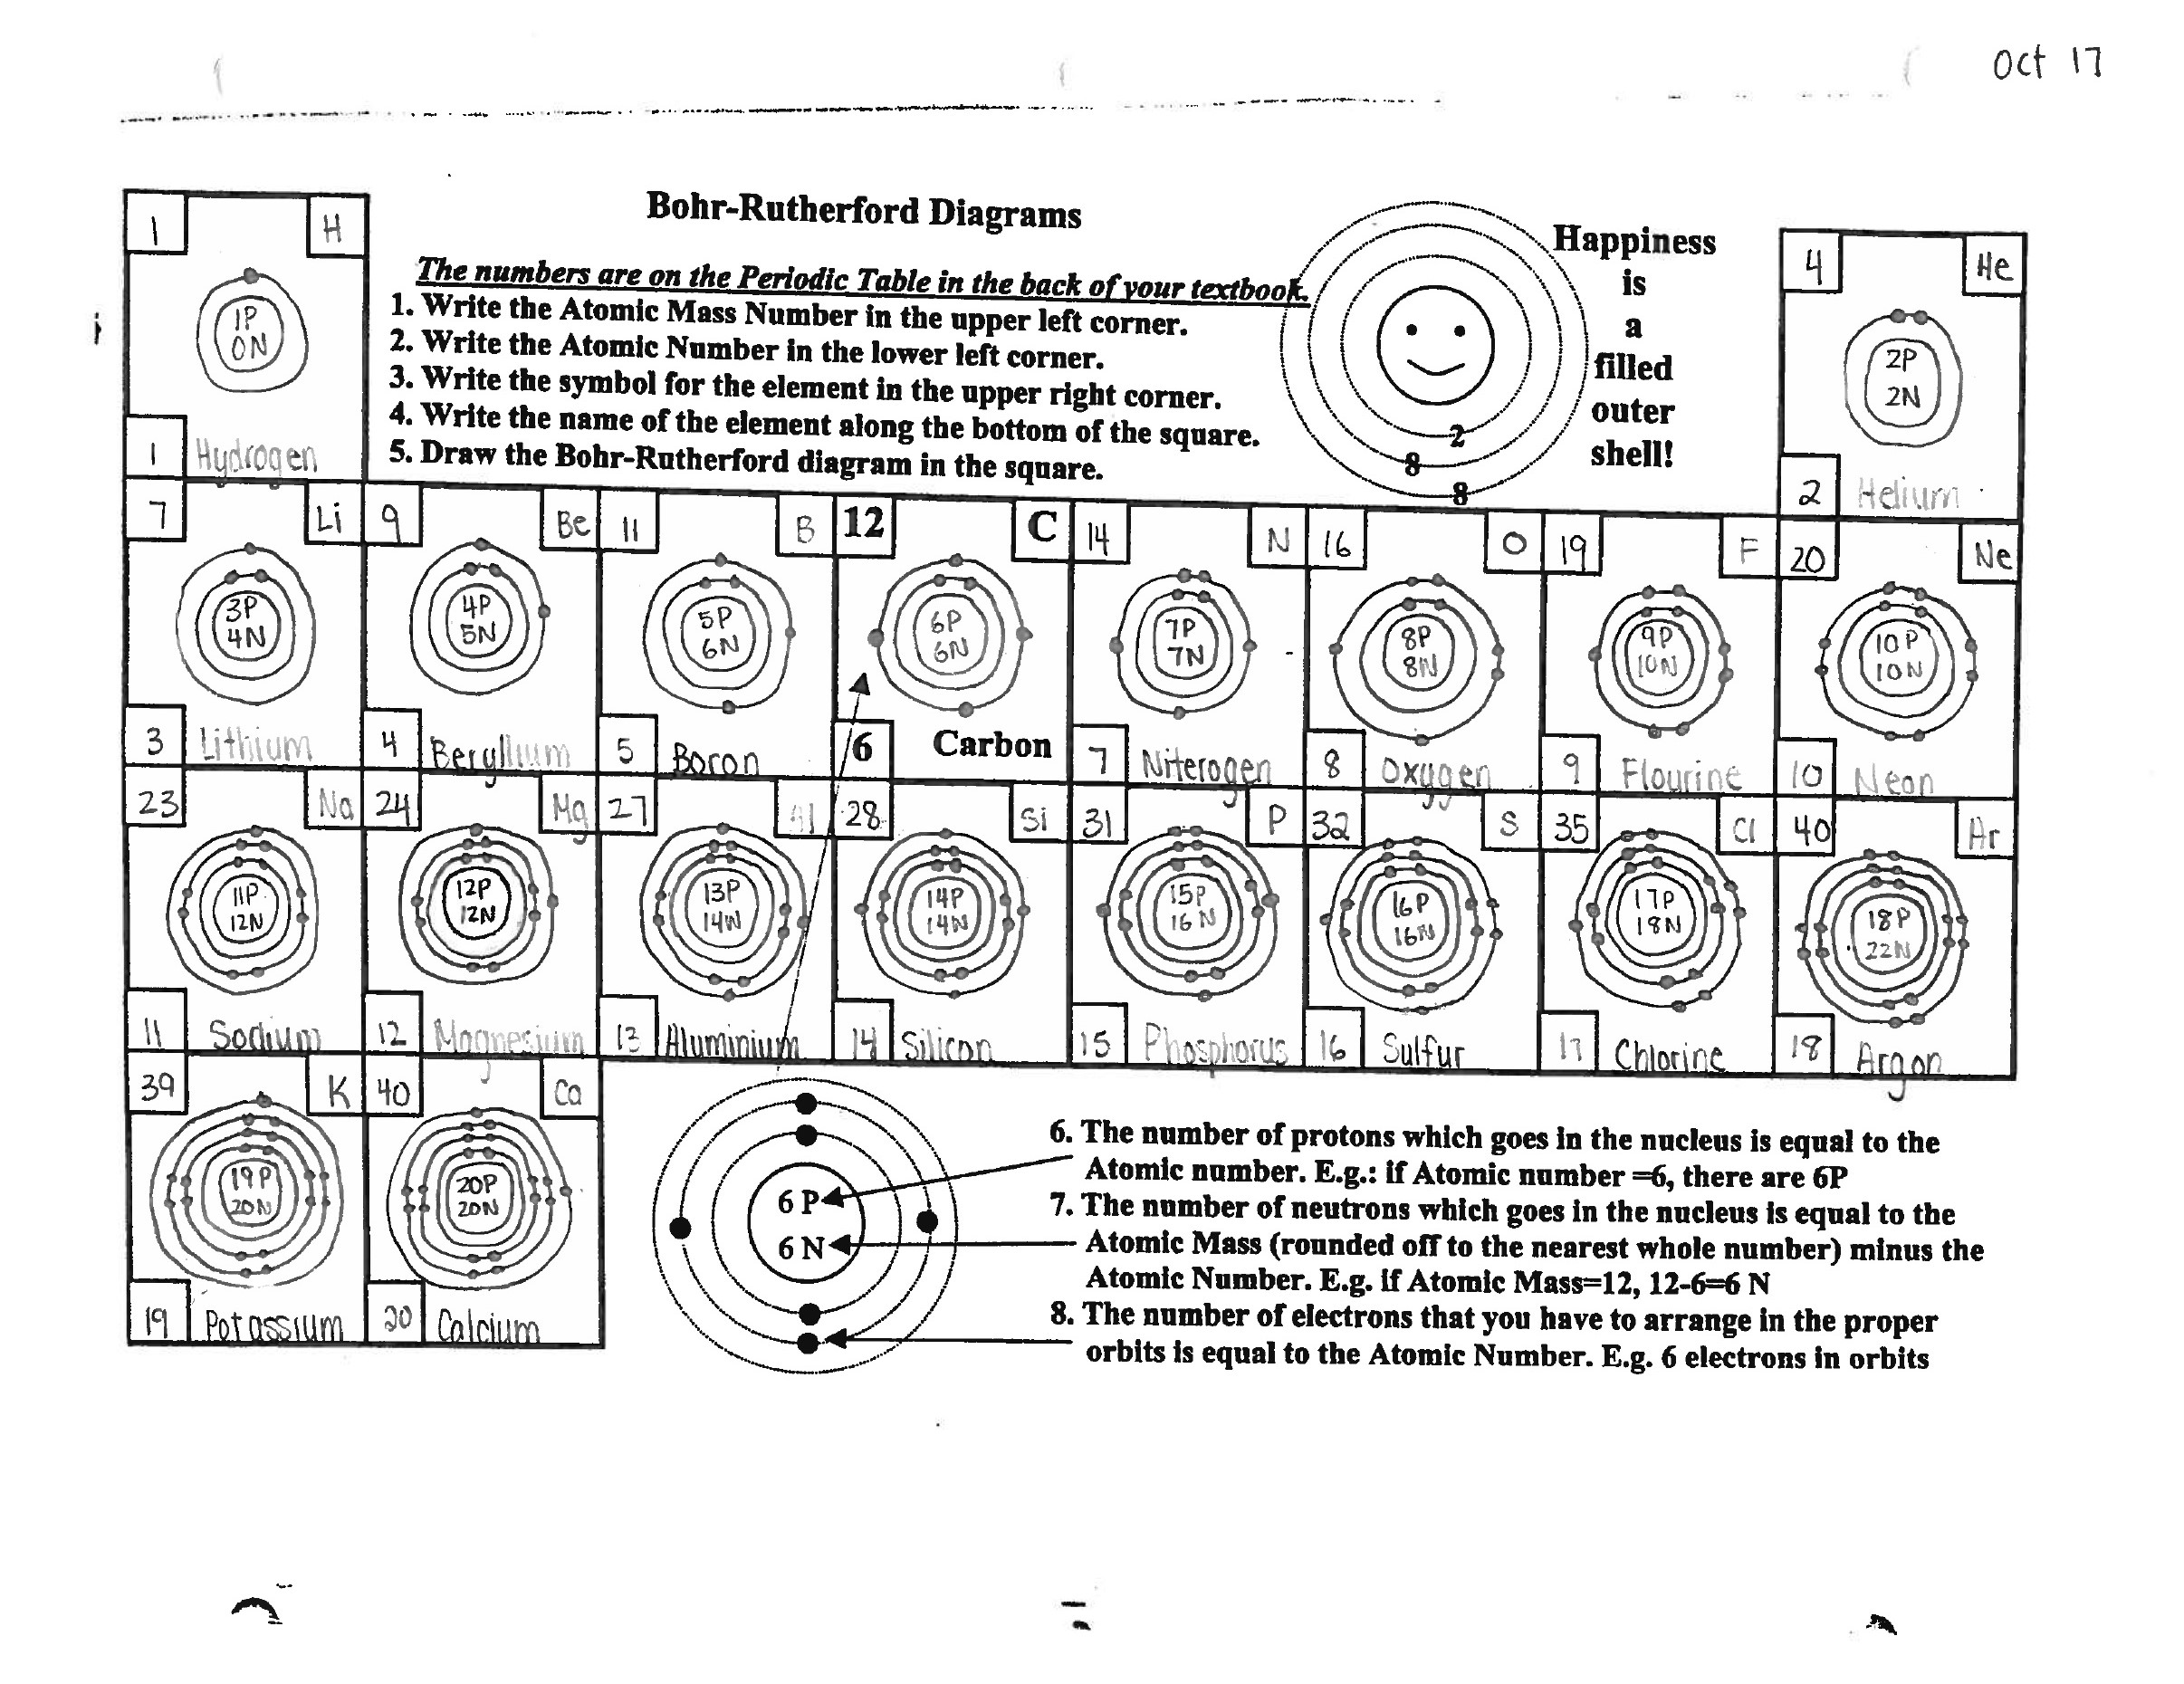 Bohr Model Diagrams Worksheet Answers - Nidecmege In Bohr Atomic Models Worksheet